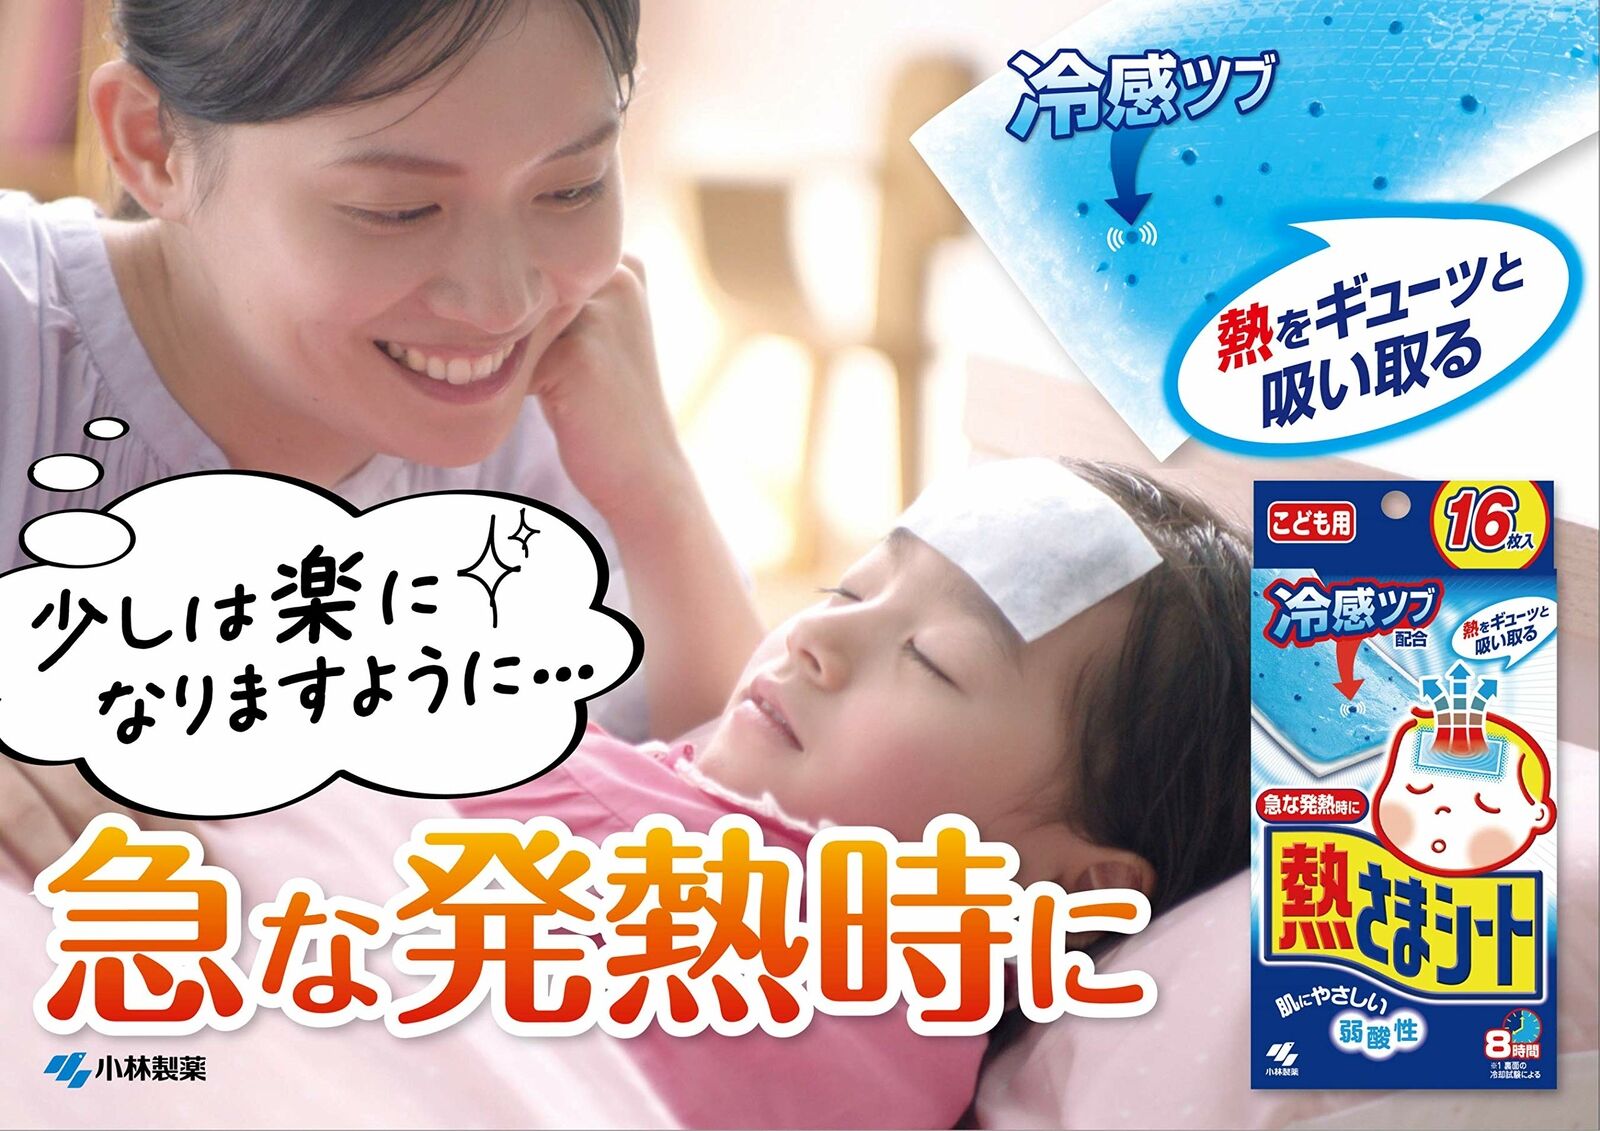 Kobayashi Seiyaku Cooling Sheet for Children 16 Sheets